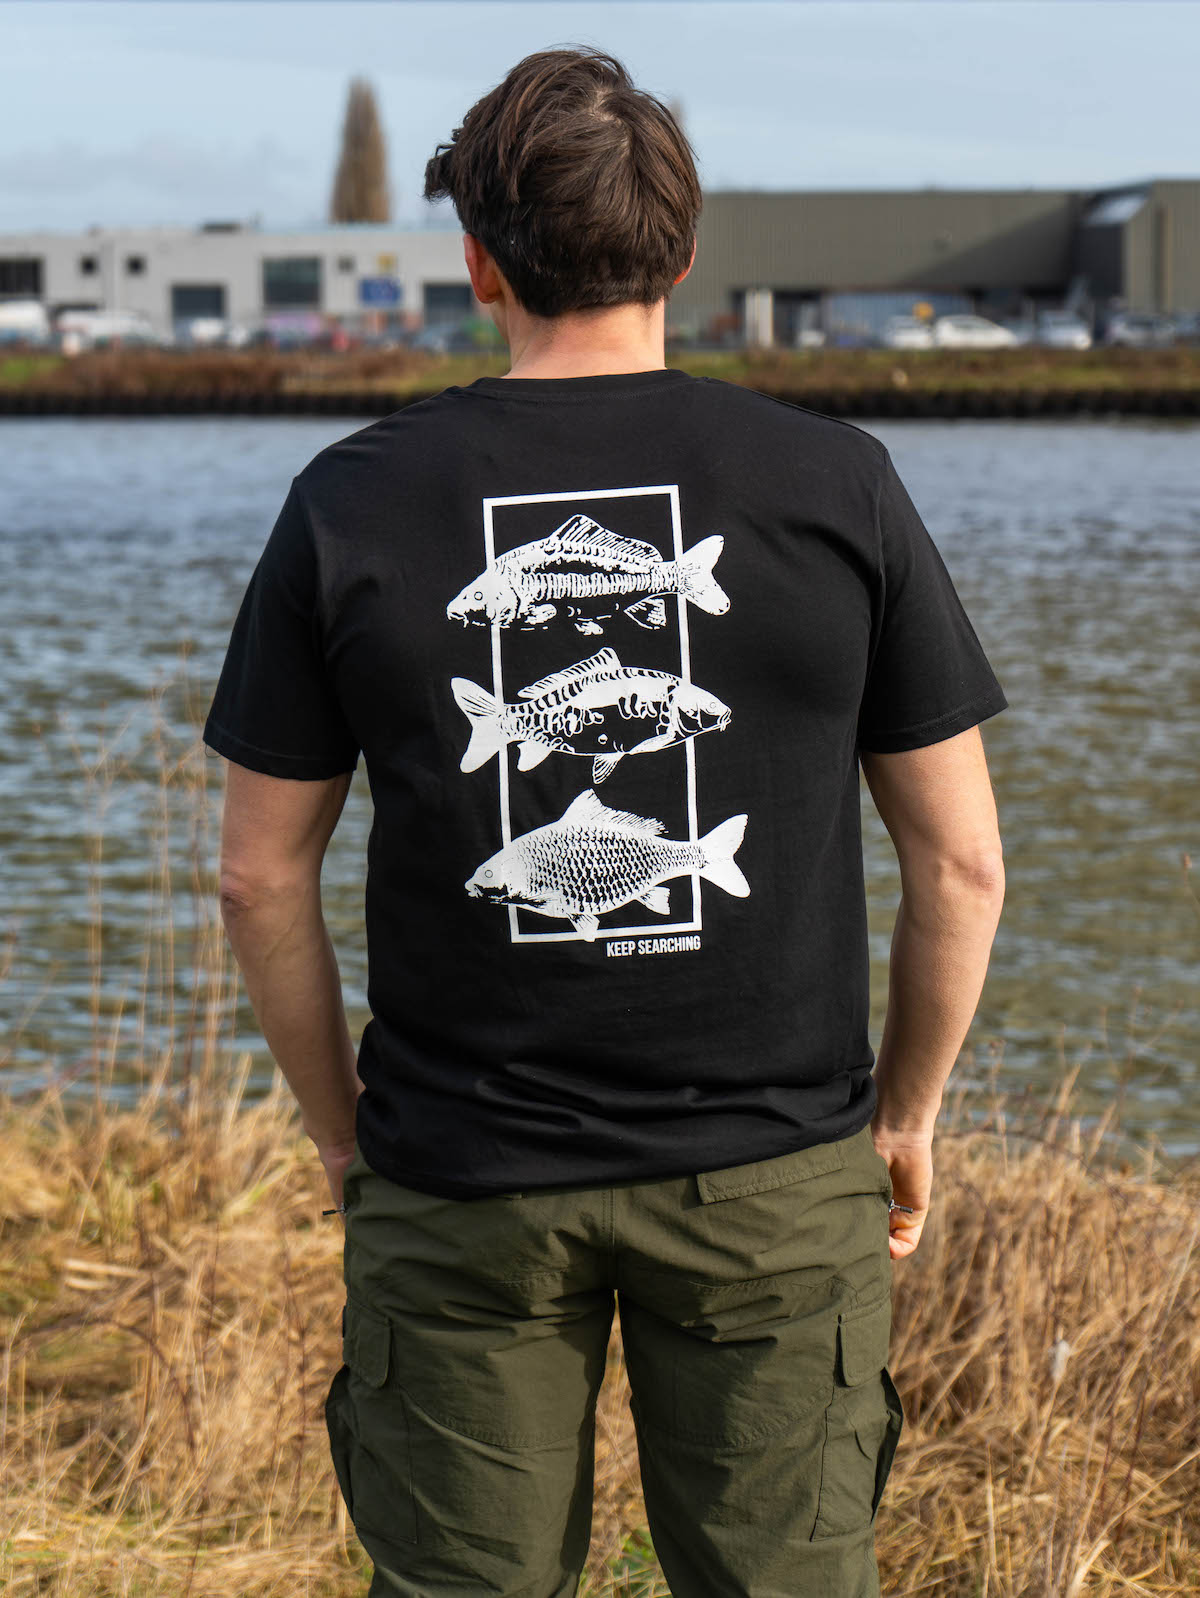 
                  
                    Carpy t-shirt black voor karpervissen
                  
                